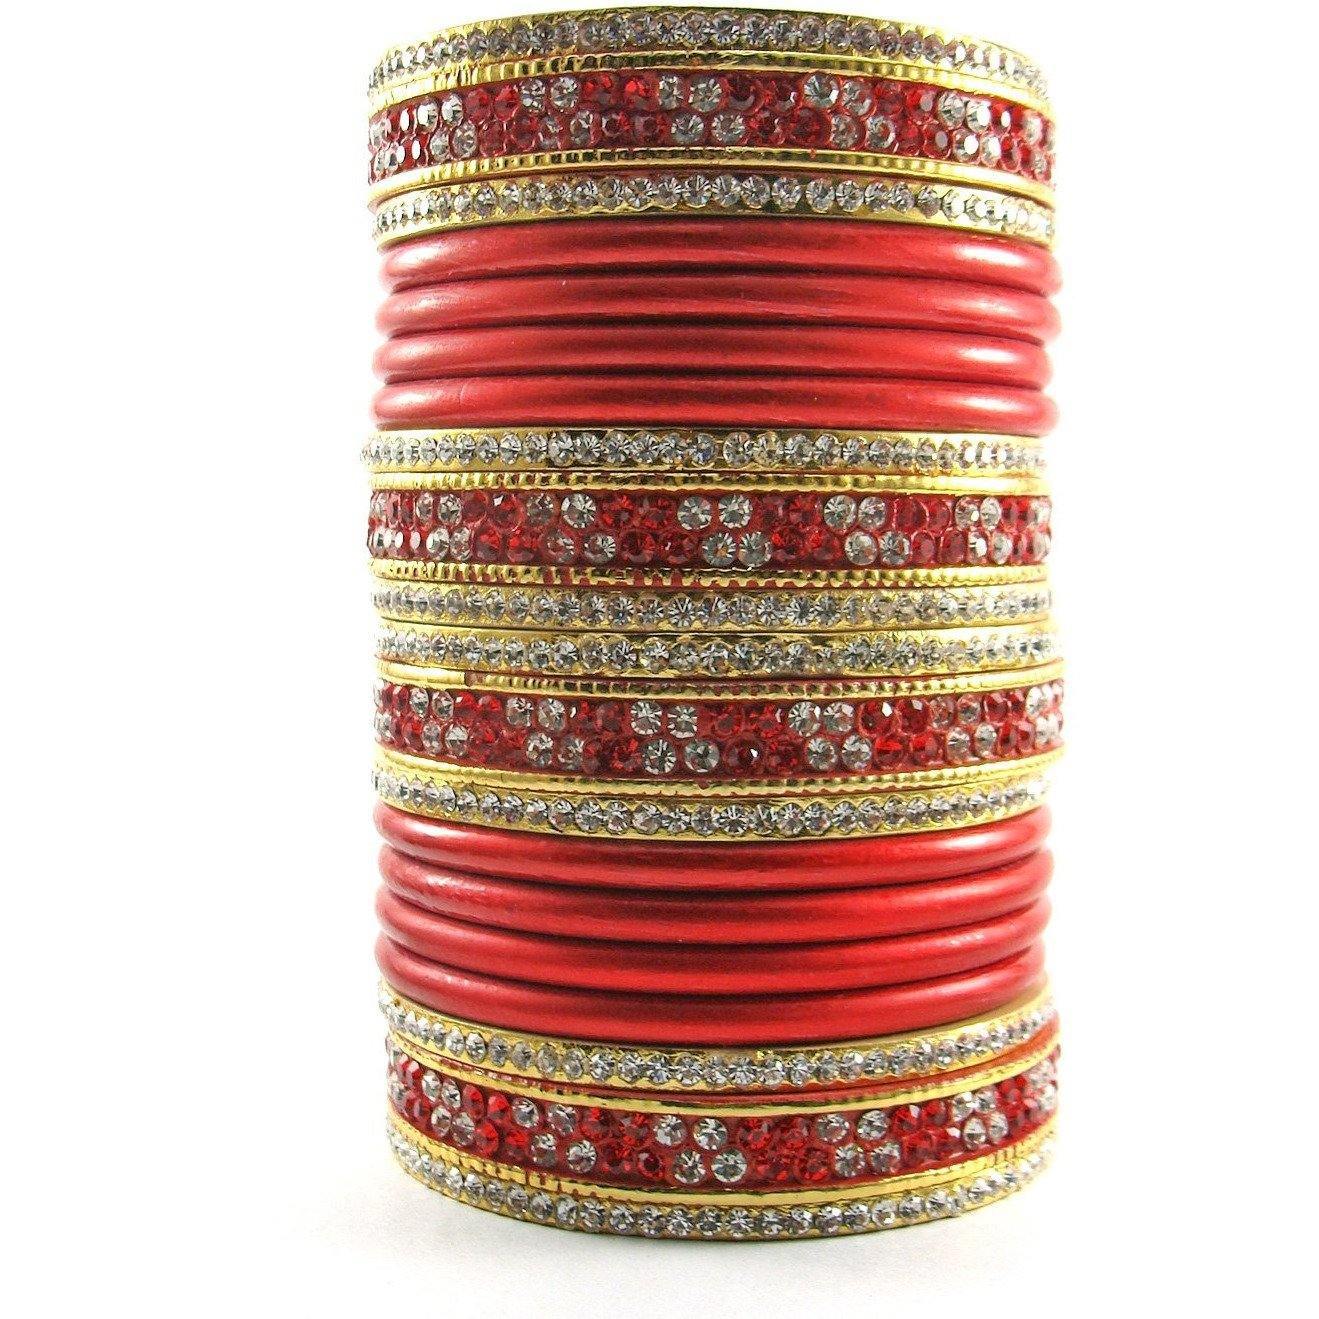 sukriti bridal red lac chura bangles for women -set of 20